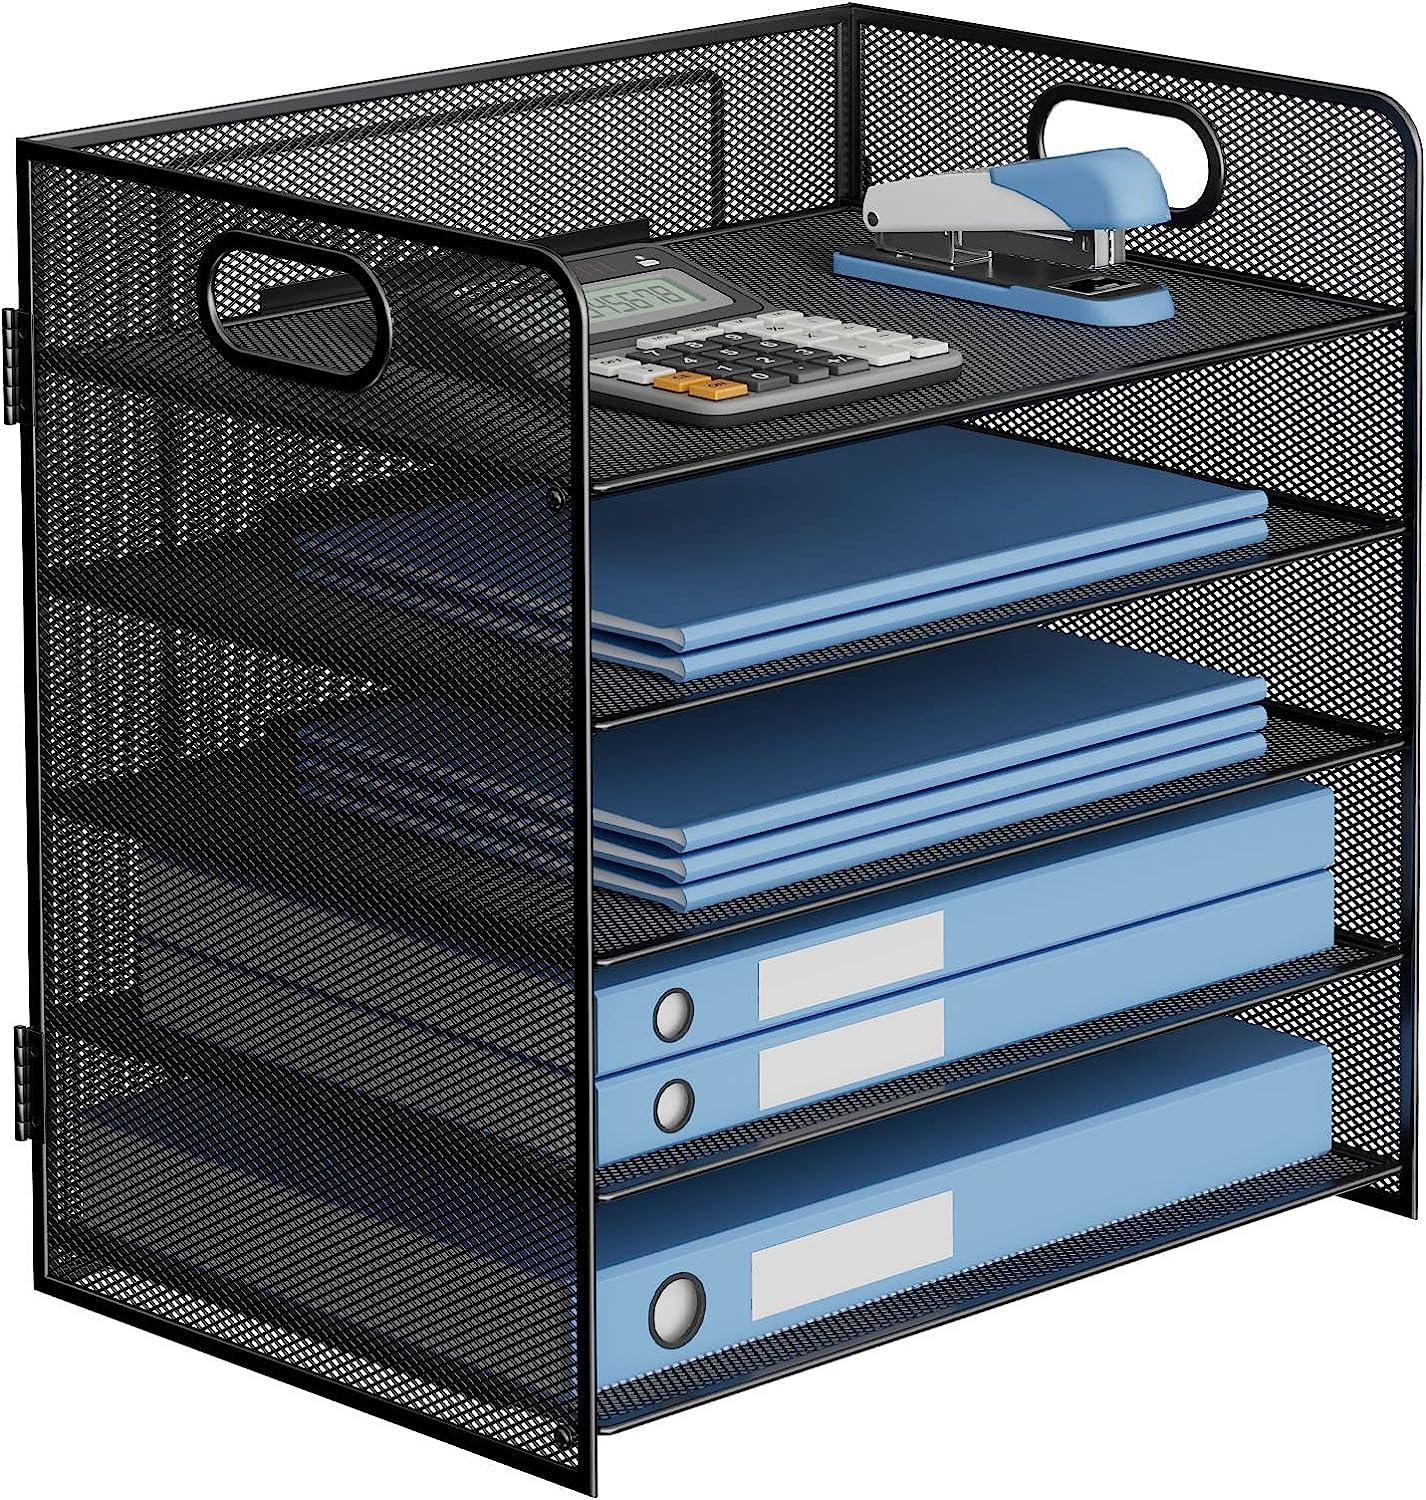 gdindinfan 5-tier letter tray paper organizer mesh desktop file organizer with handle metal desk paper sorter